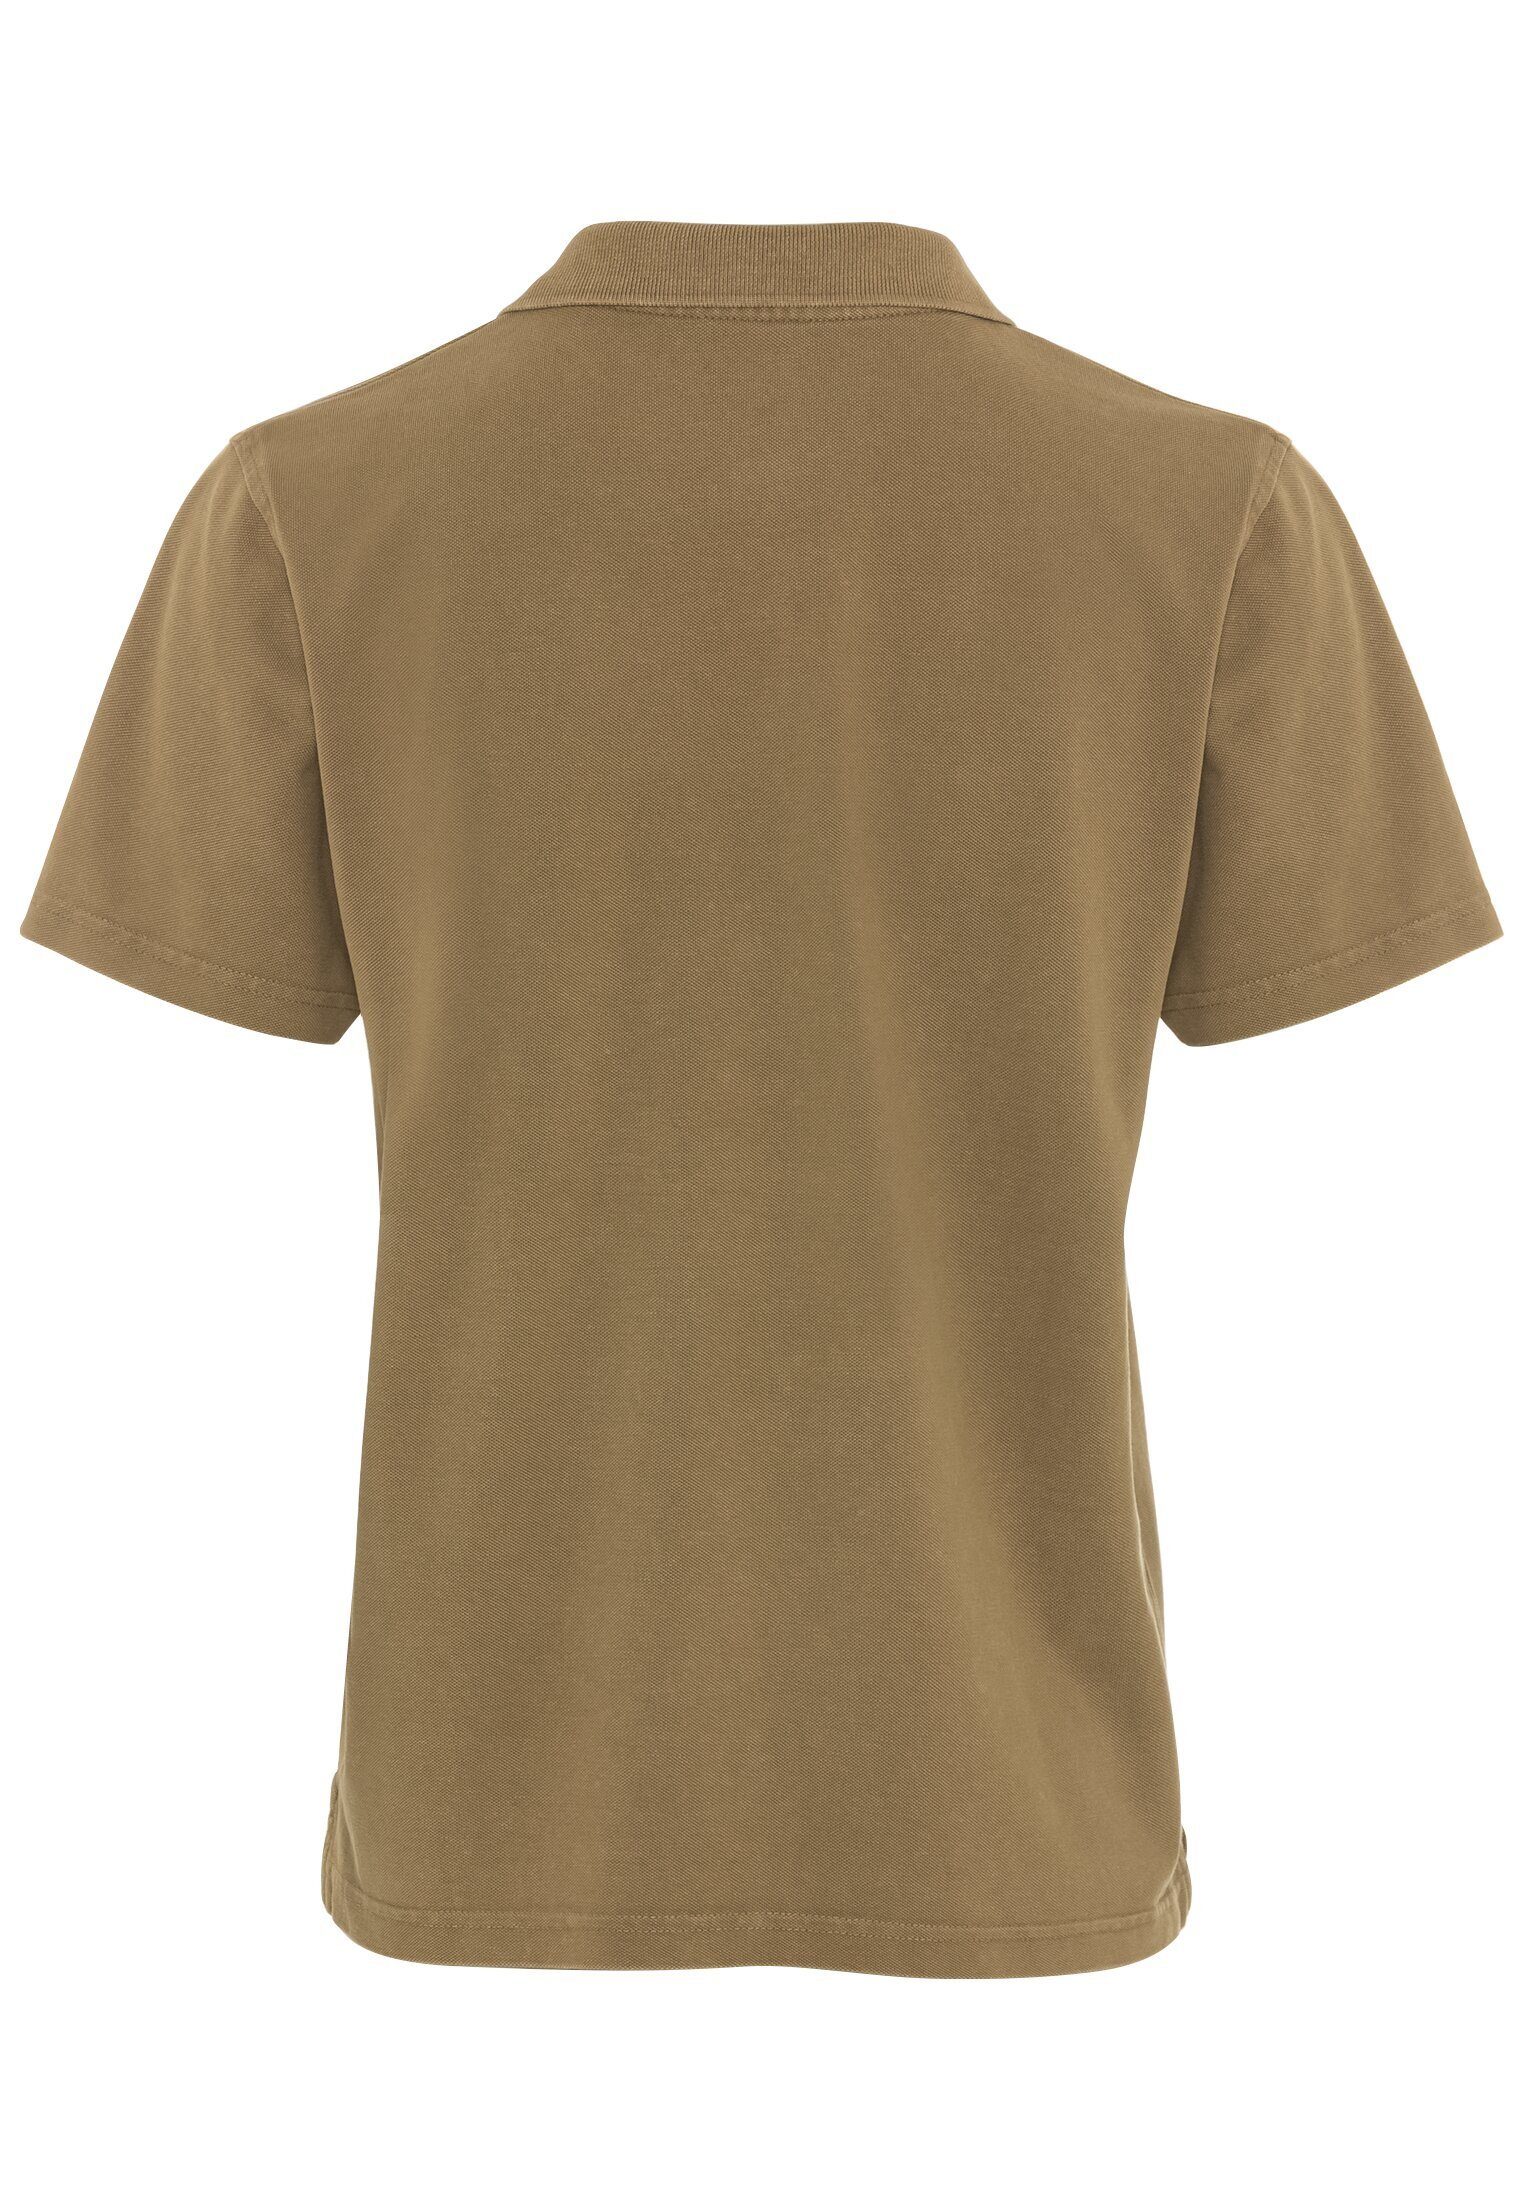 aus active Poloshirt camel Organic Shirts_Poloshirt Cotton Oliv